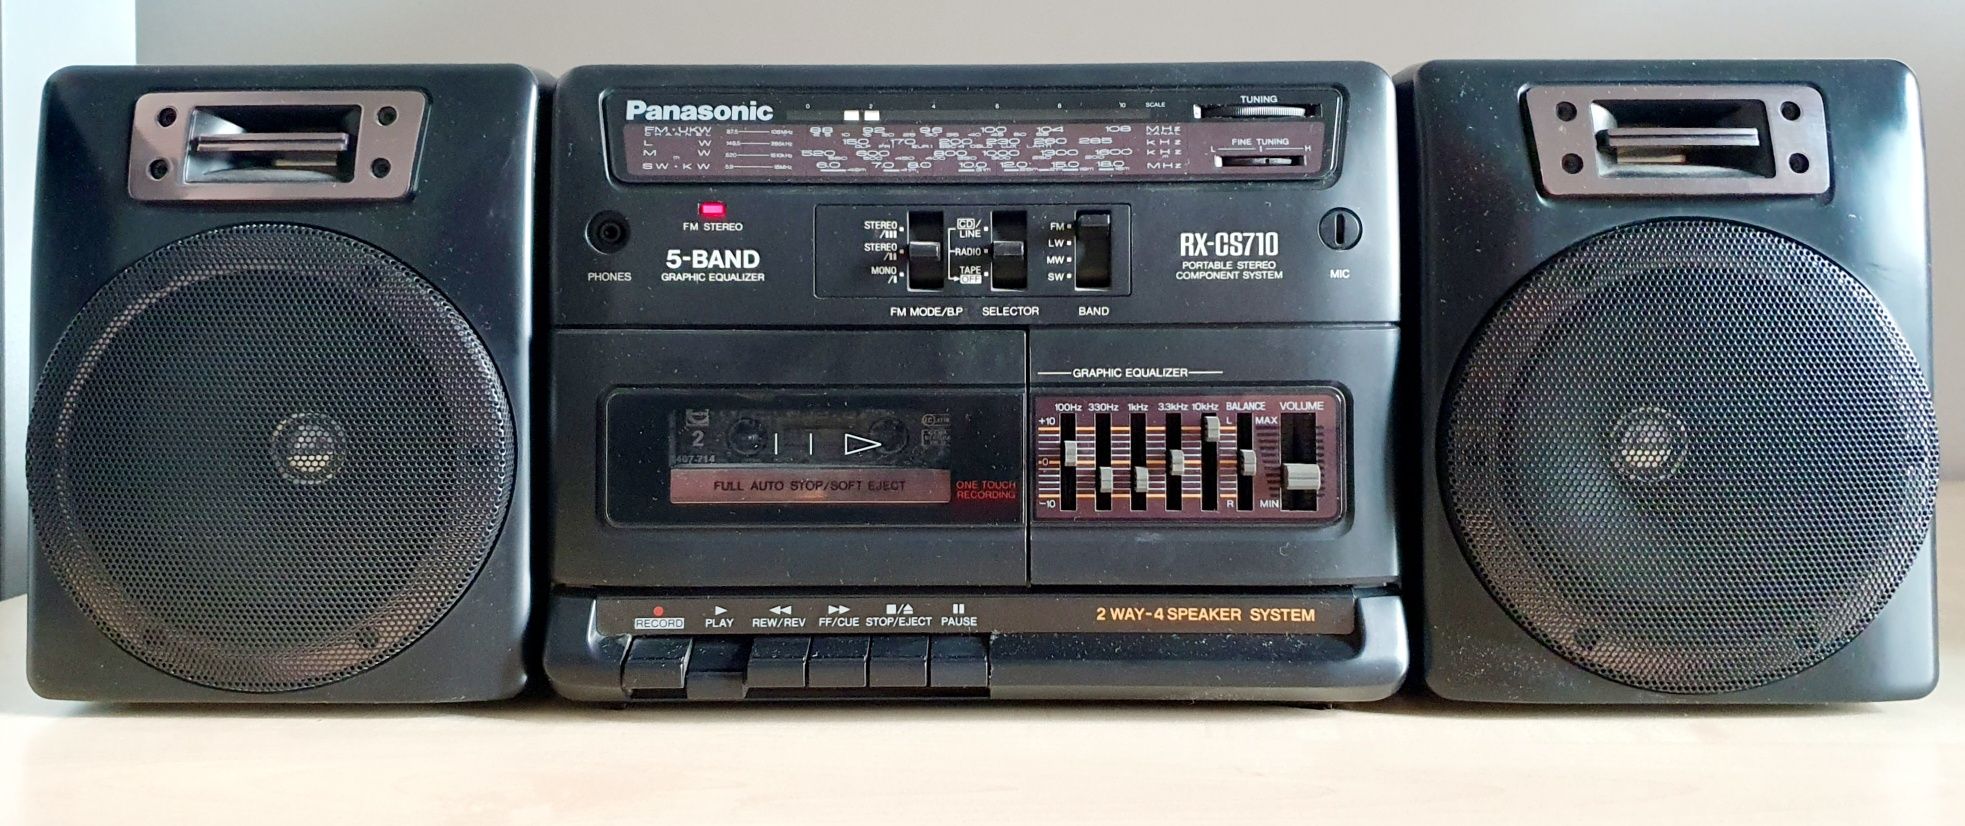 RX CS710 Panasonic boombox ghettoblaster casetofon